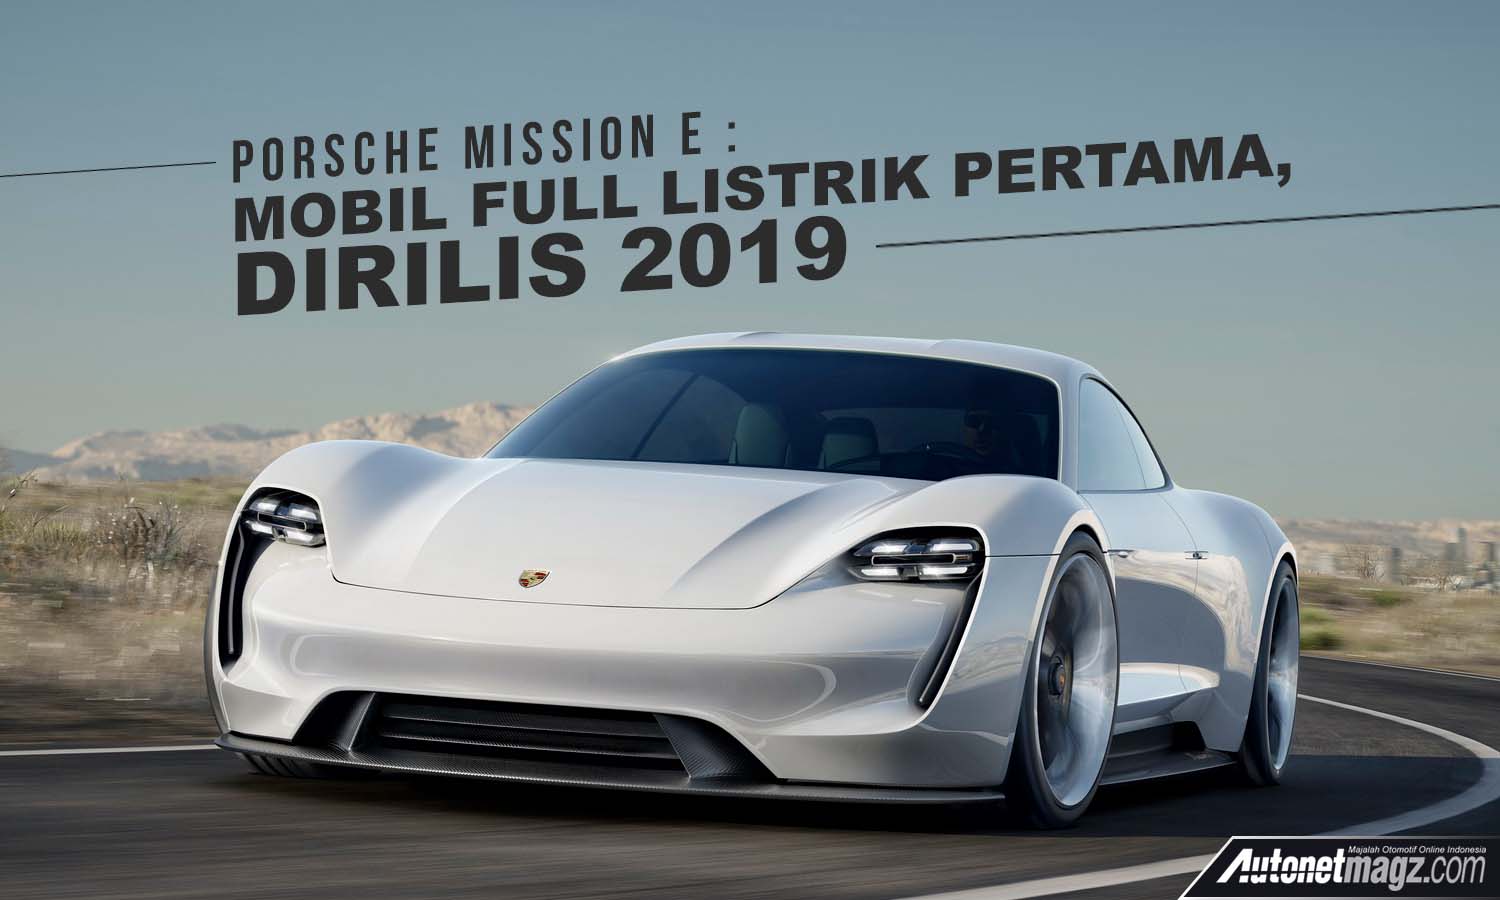 Berita, Porsche Mission E cover: Porsche Mission E : Mobil Full Listrik Pertama Porsche, Rilis 2019